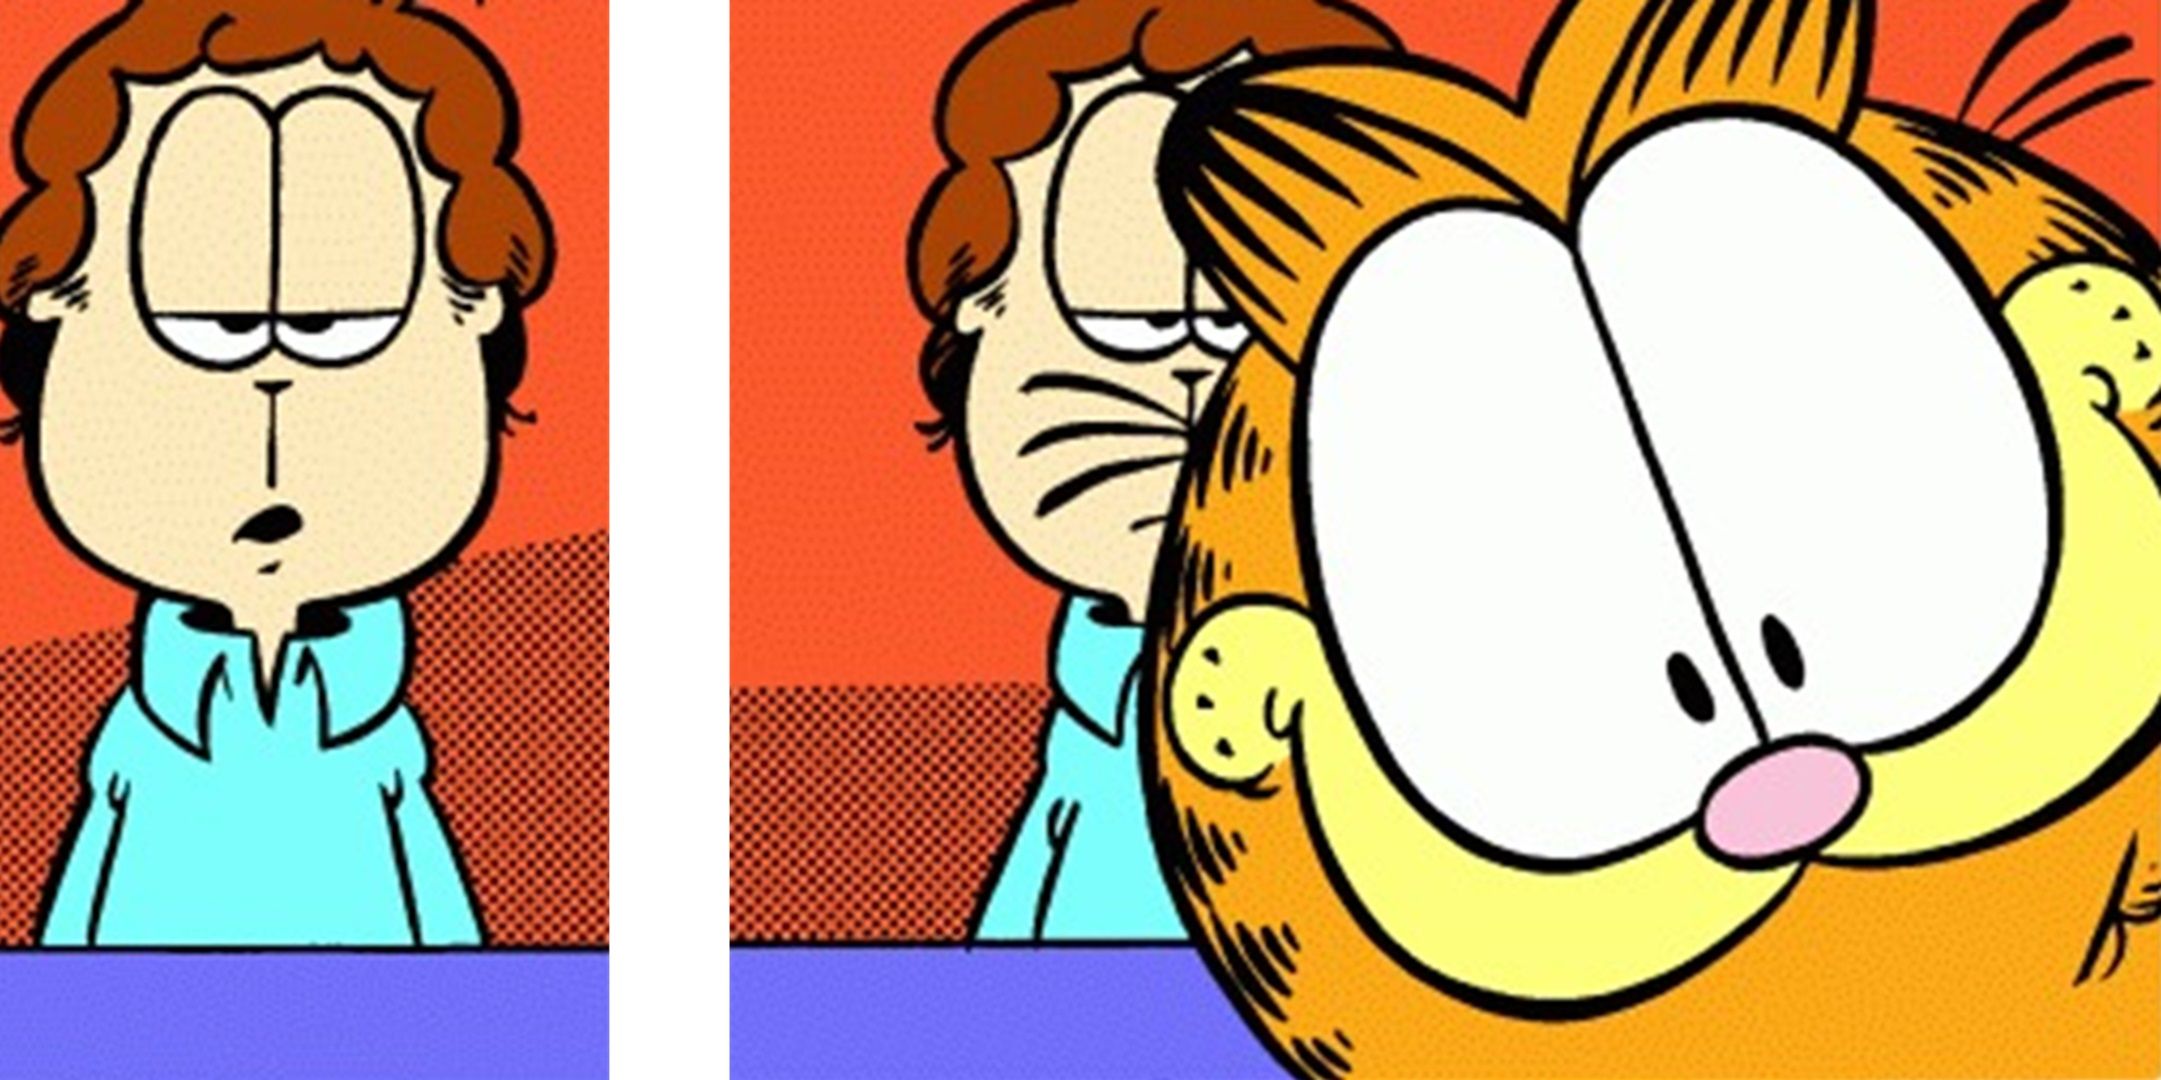 Garfield breaks the fourth wall